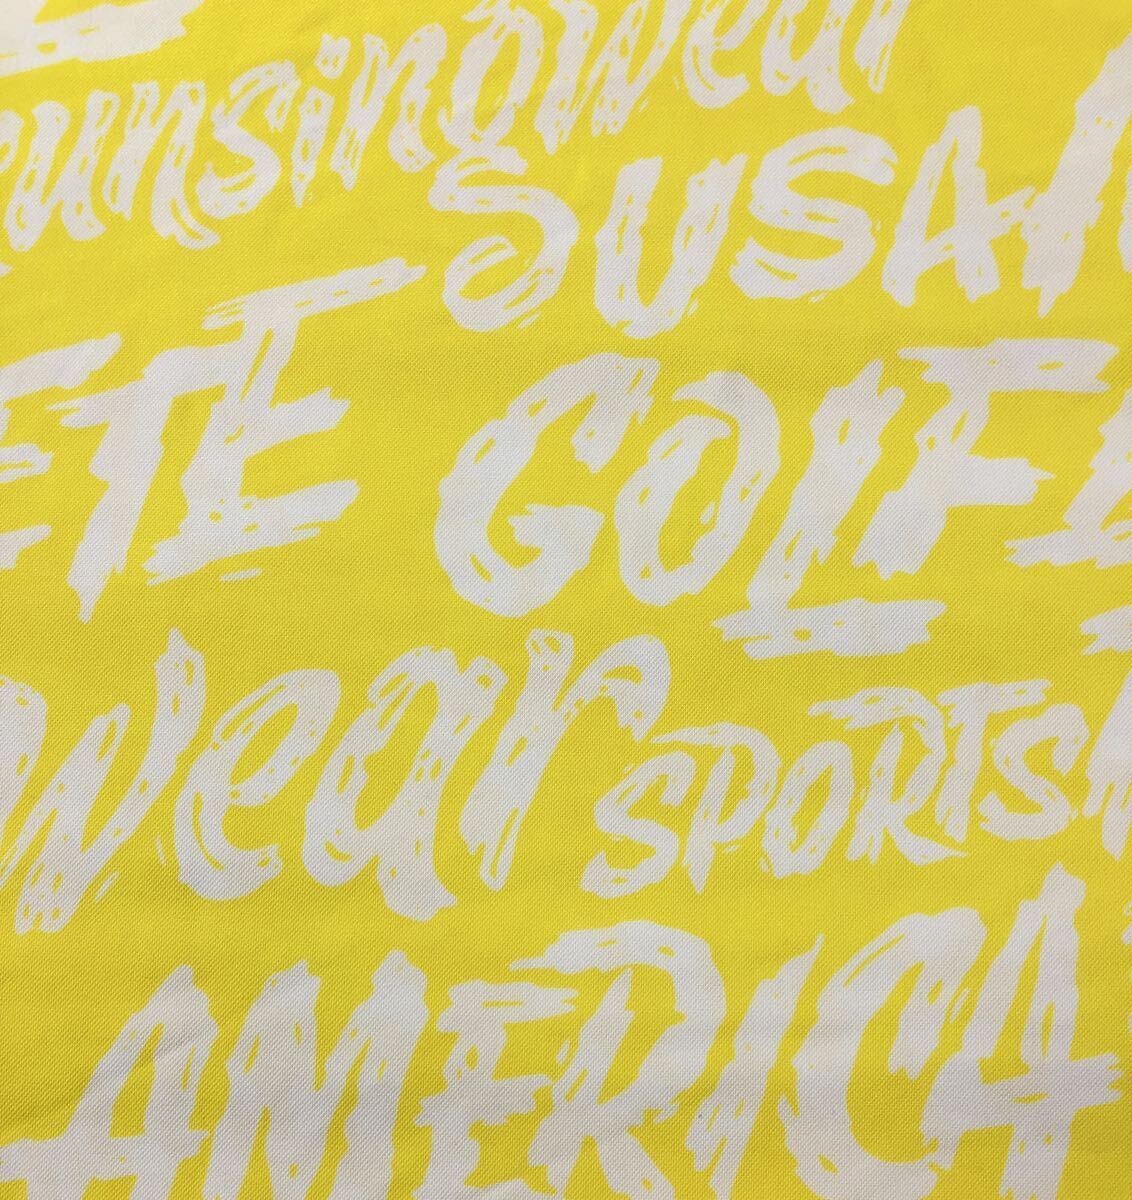  large size * Munsingwear Munsingwear wear * Logo label total pattern Golf polo-shirt yellow × white LL